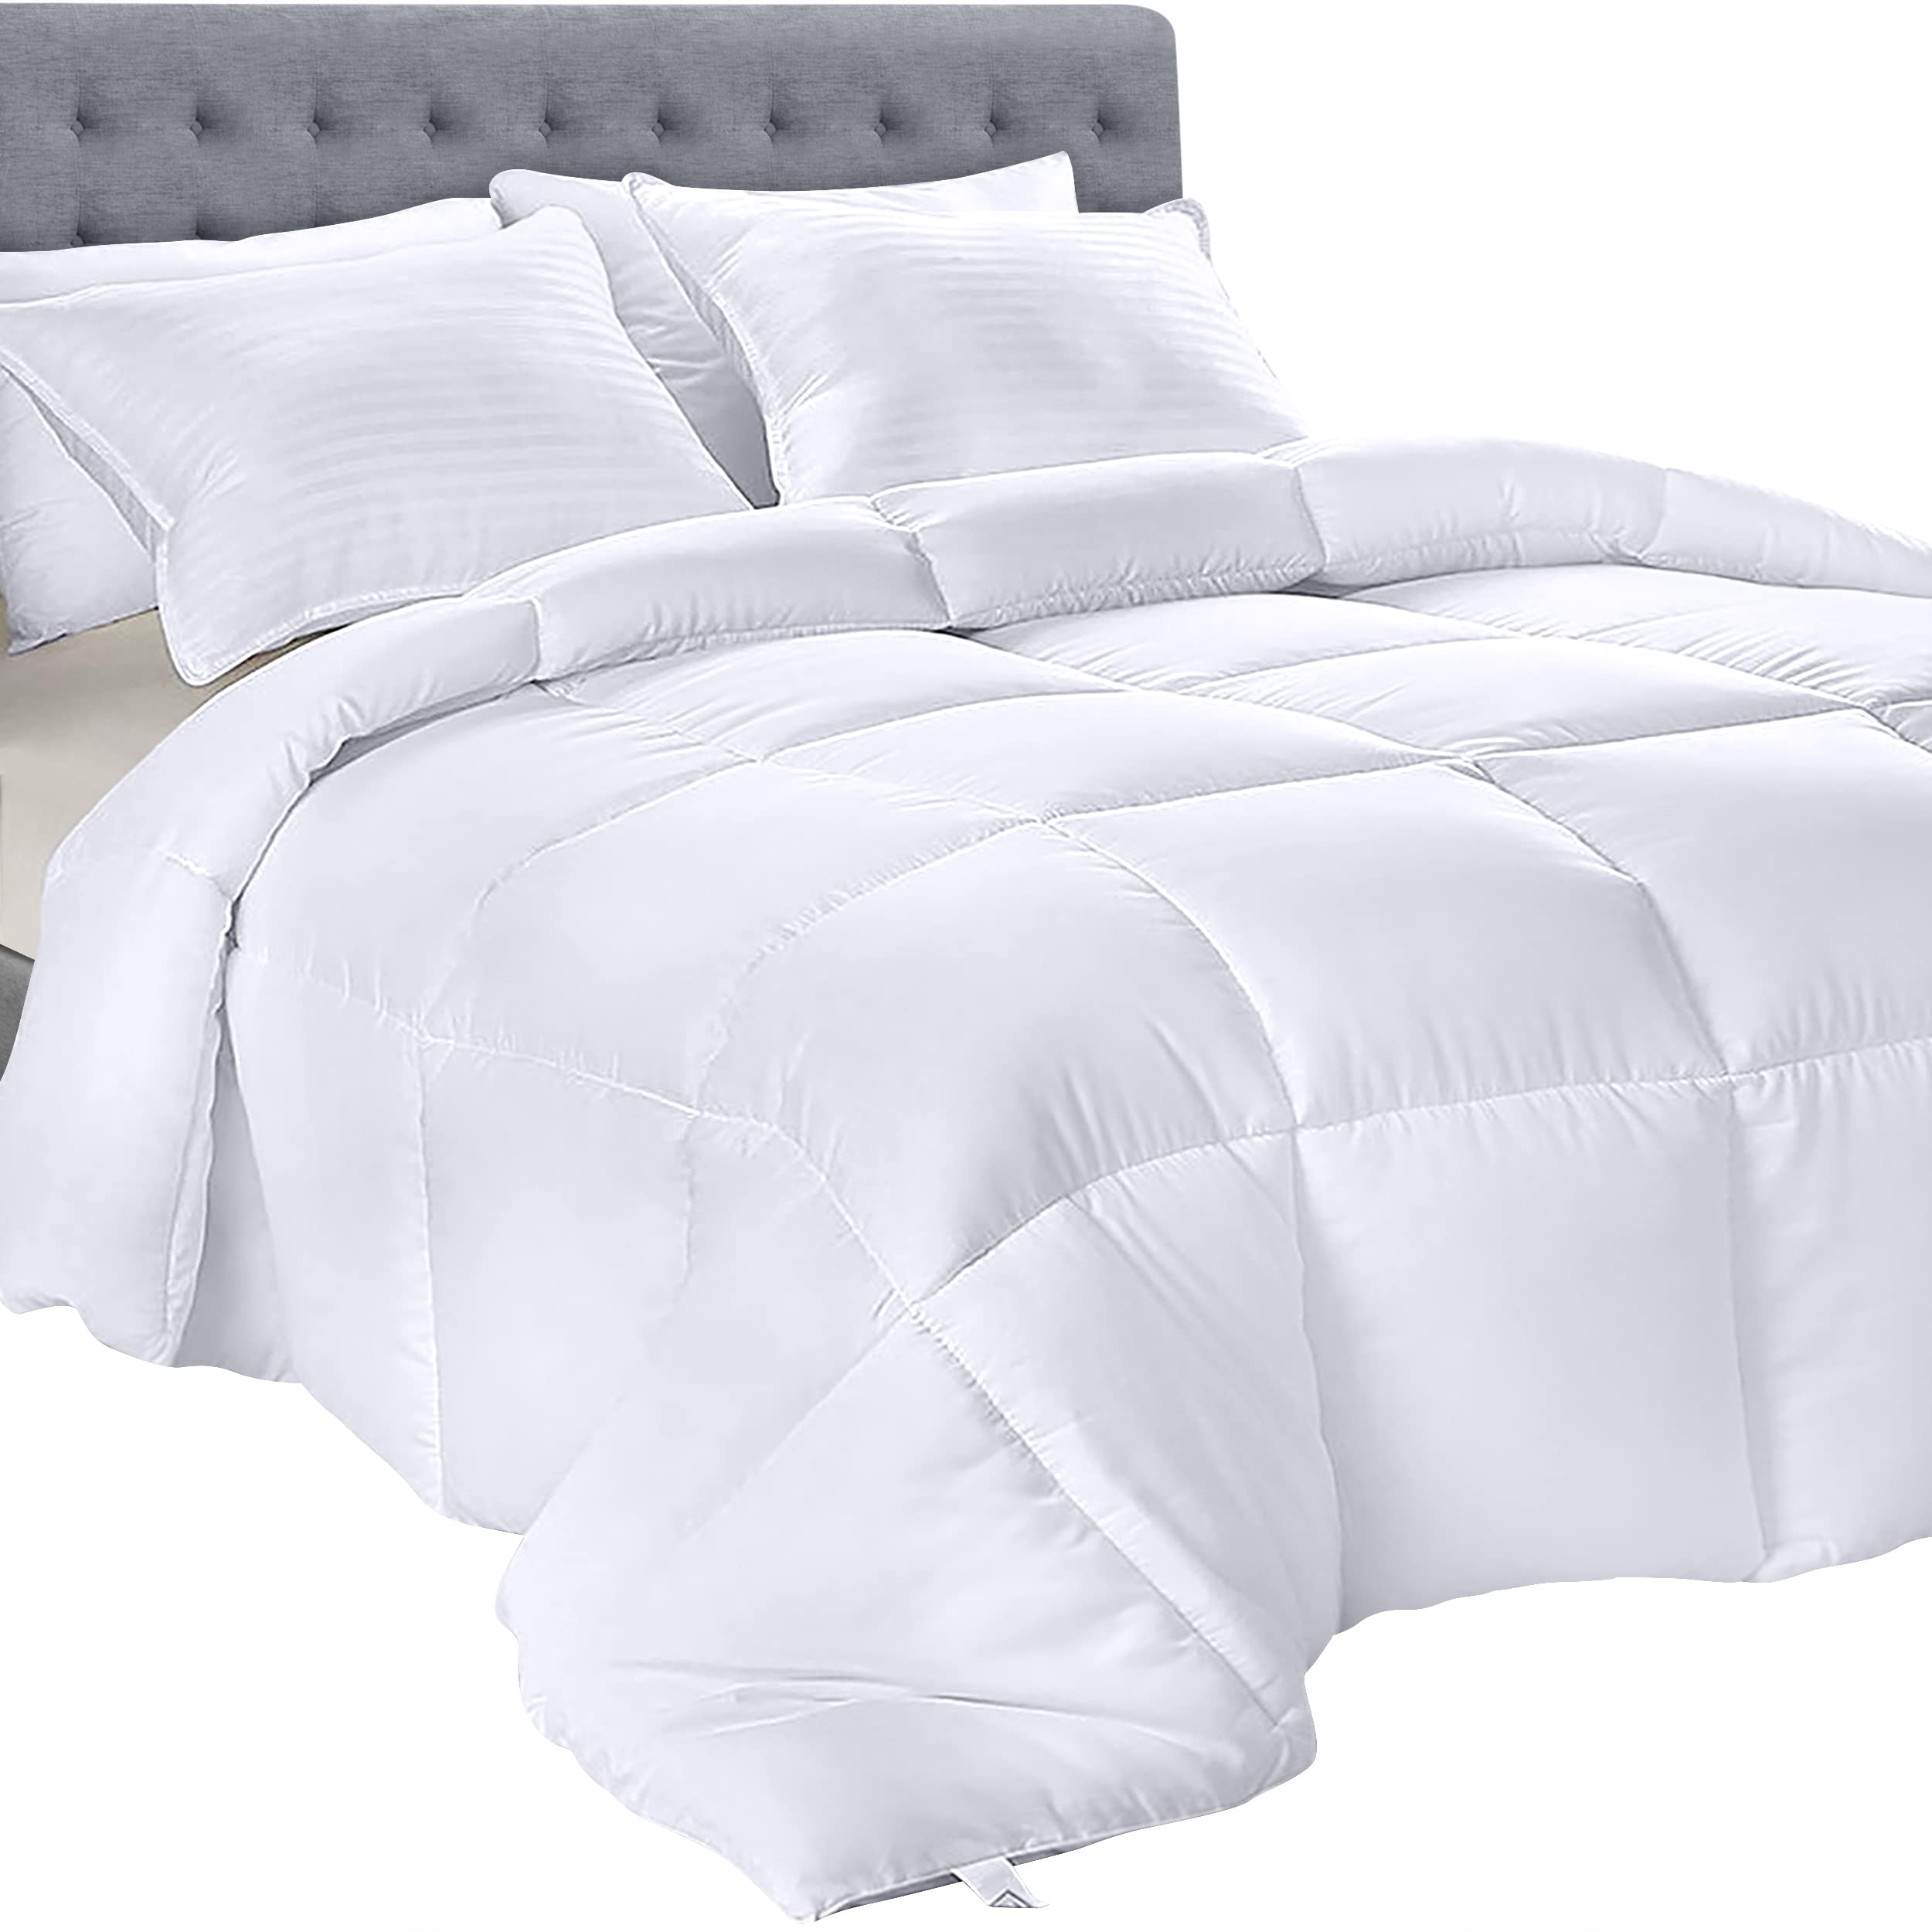 Utopia Bedding - 4 Piece Queen Bed Sheet Set - Soft Brushed Microfiber -  Black